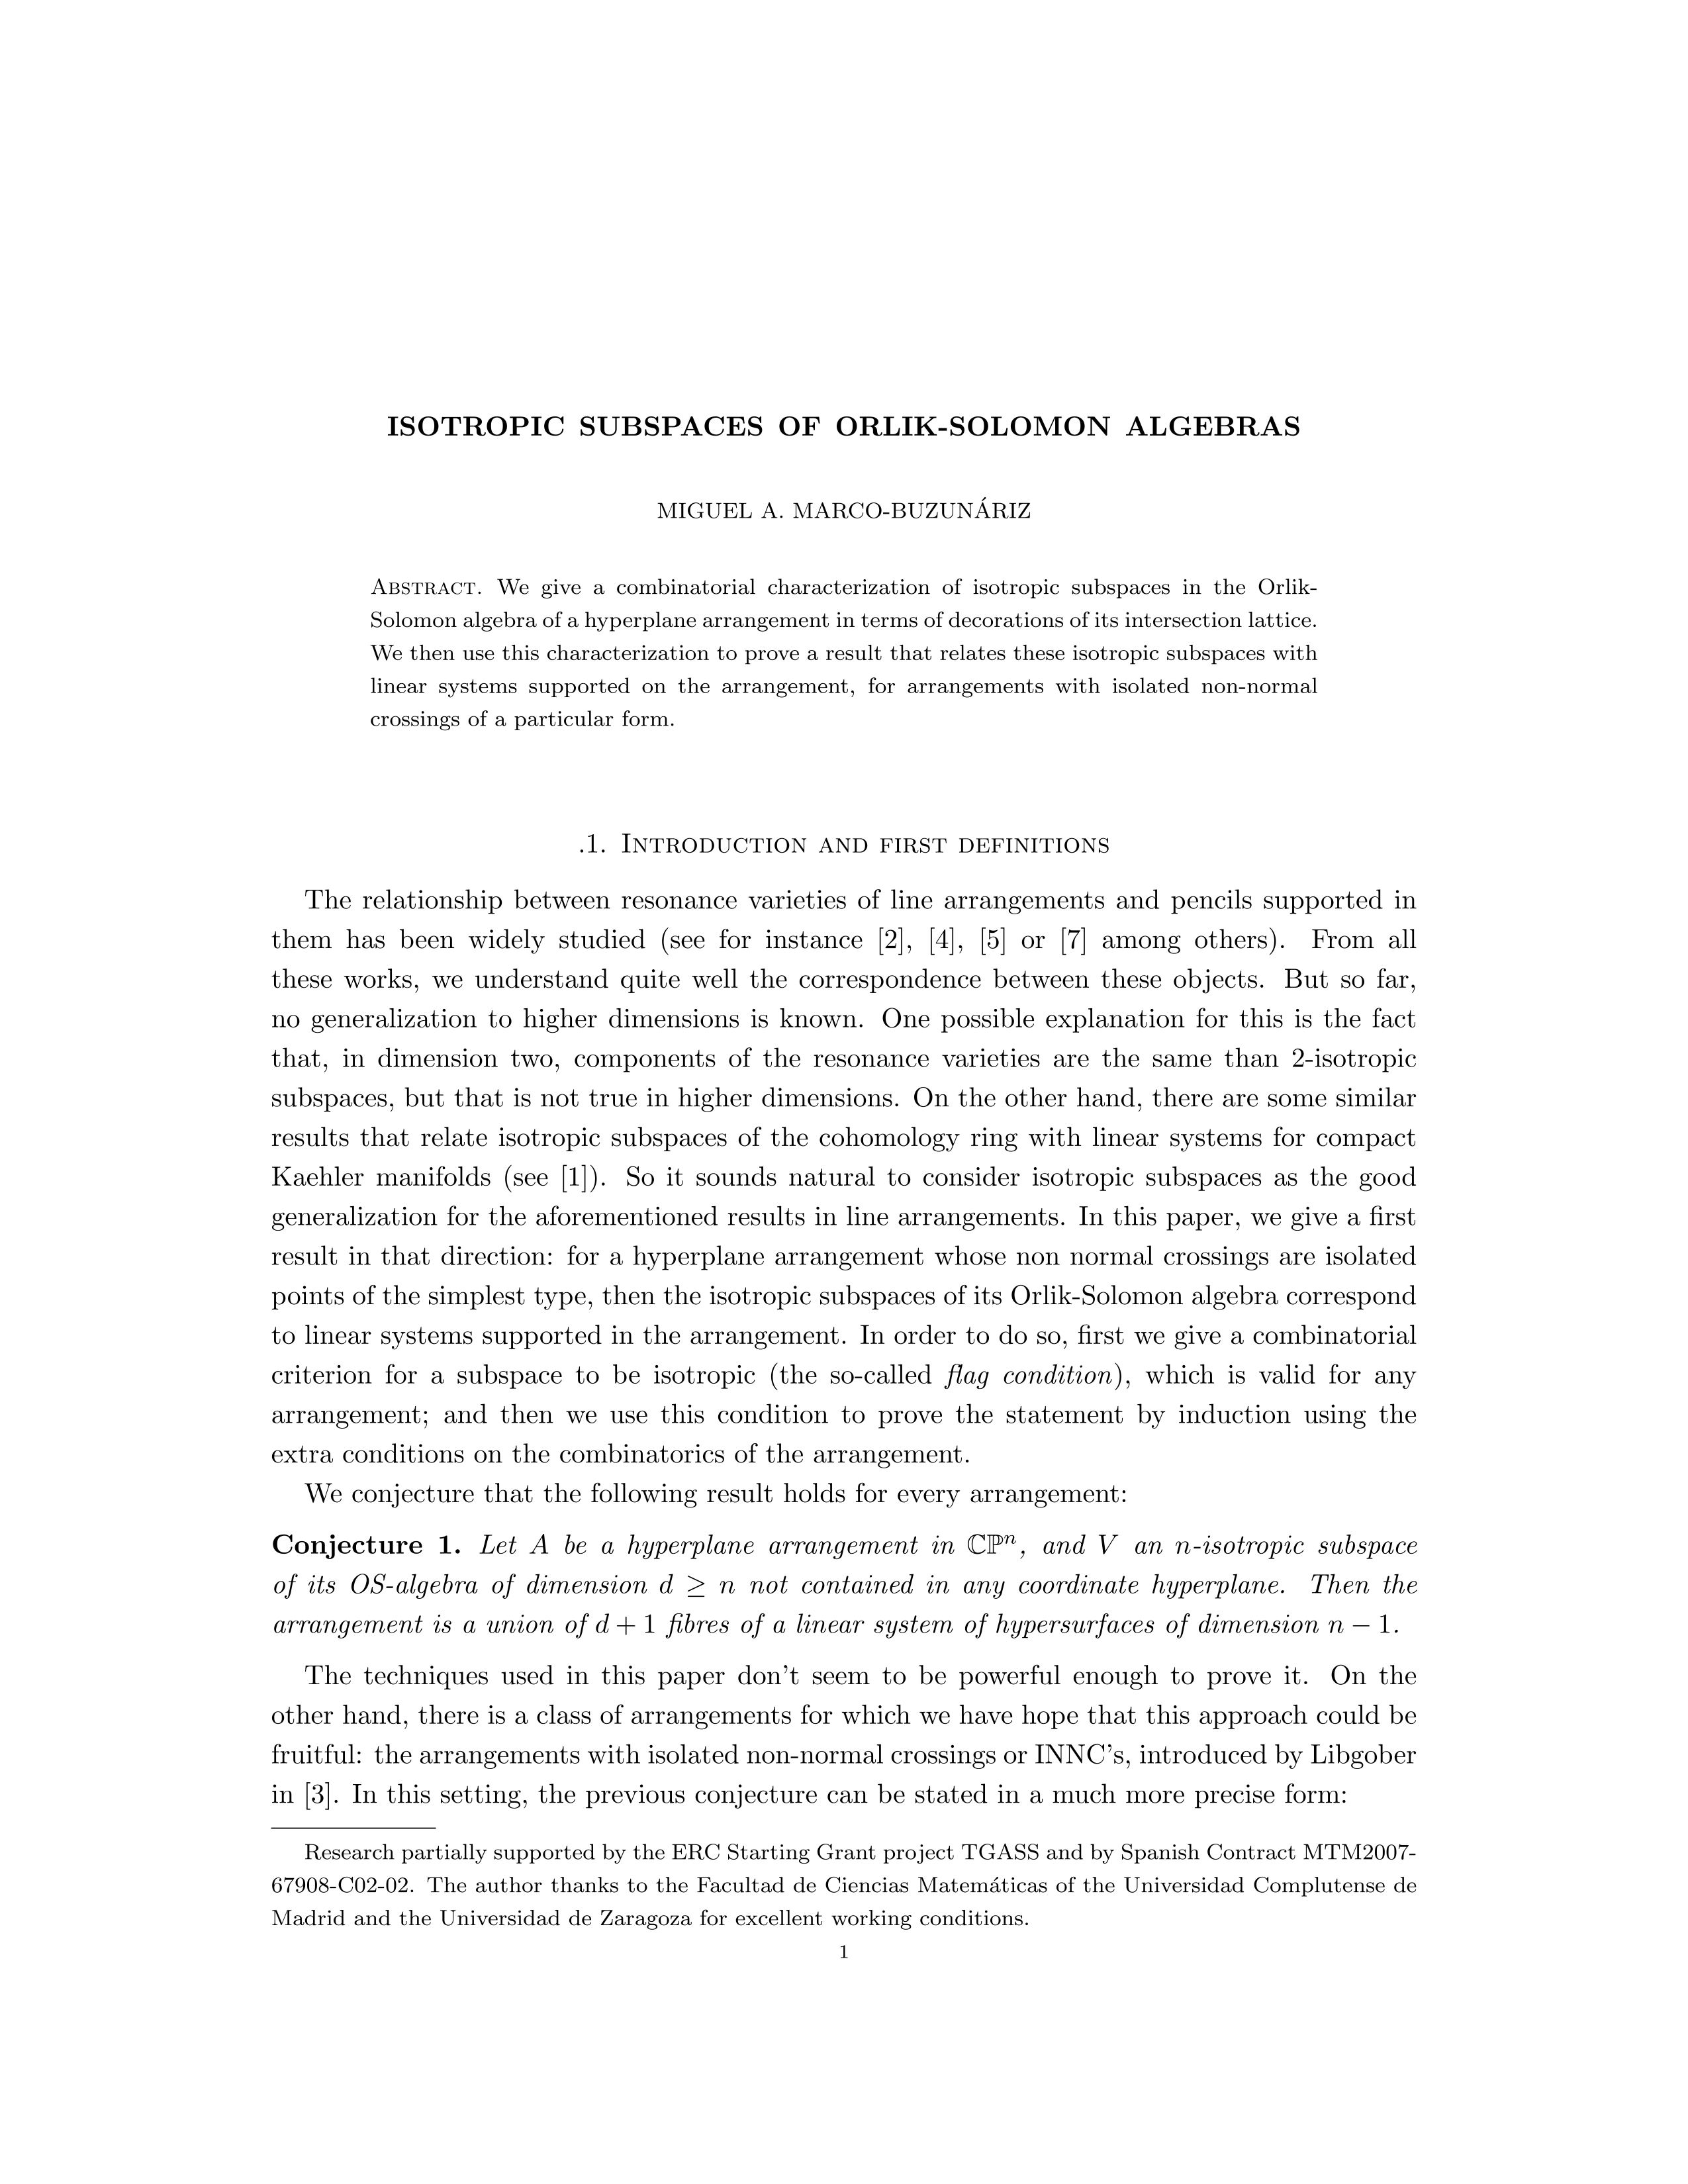 Isotropic subspaces of Orlik-Solomon algebras